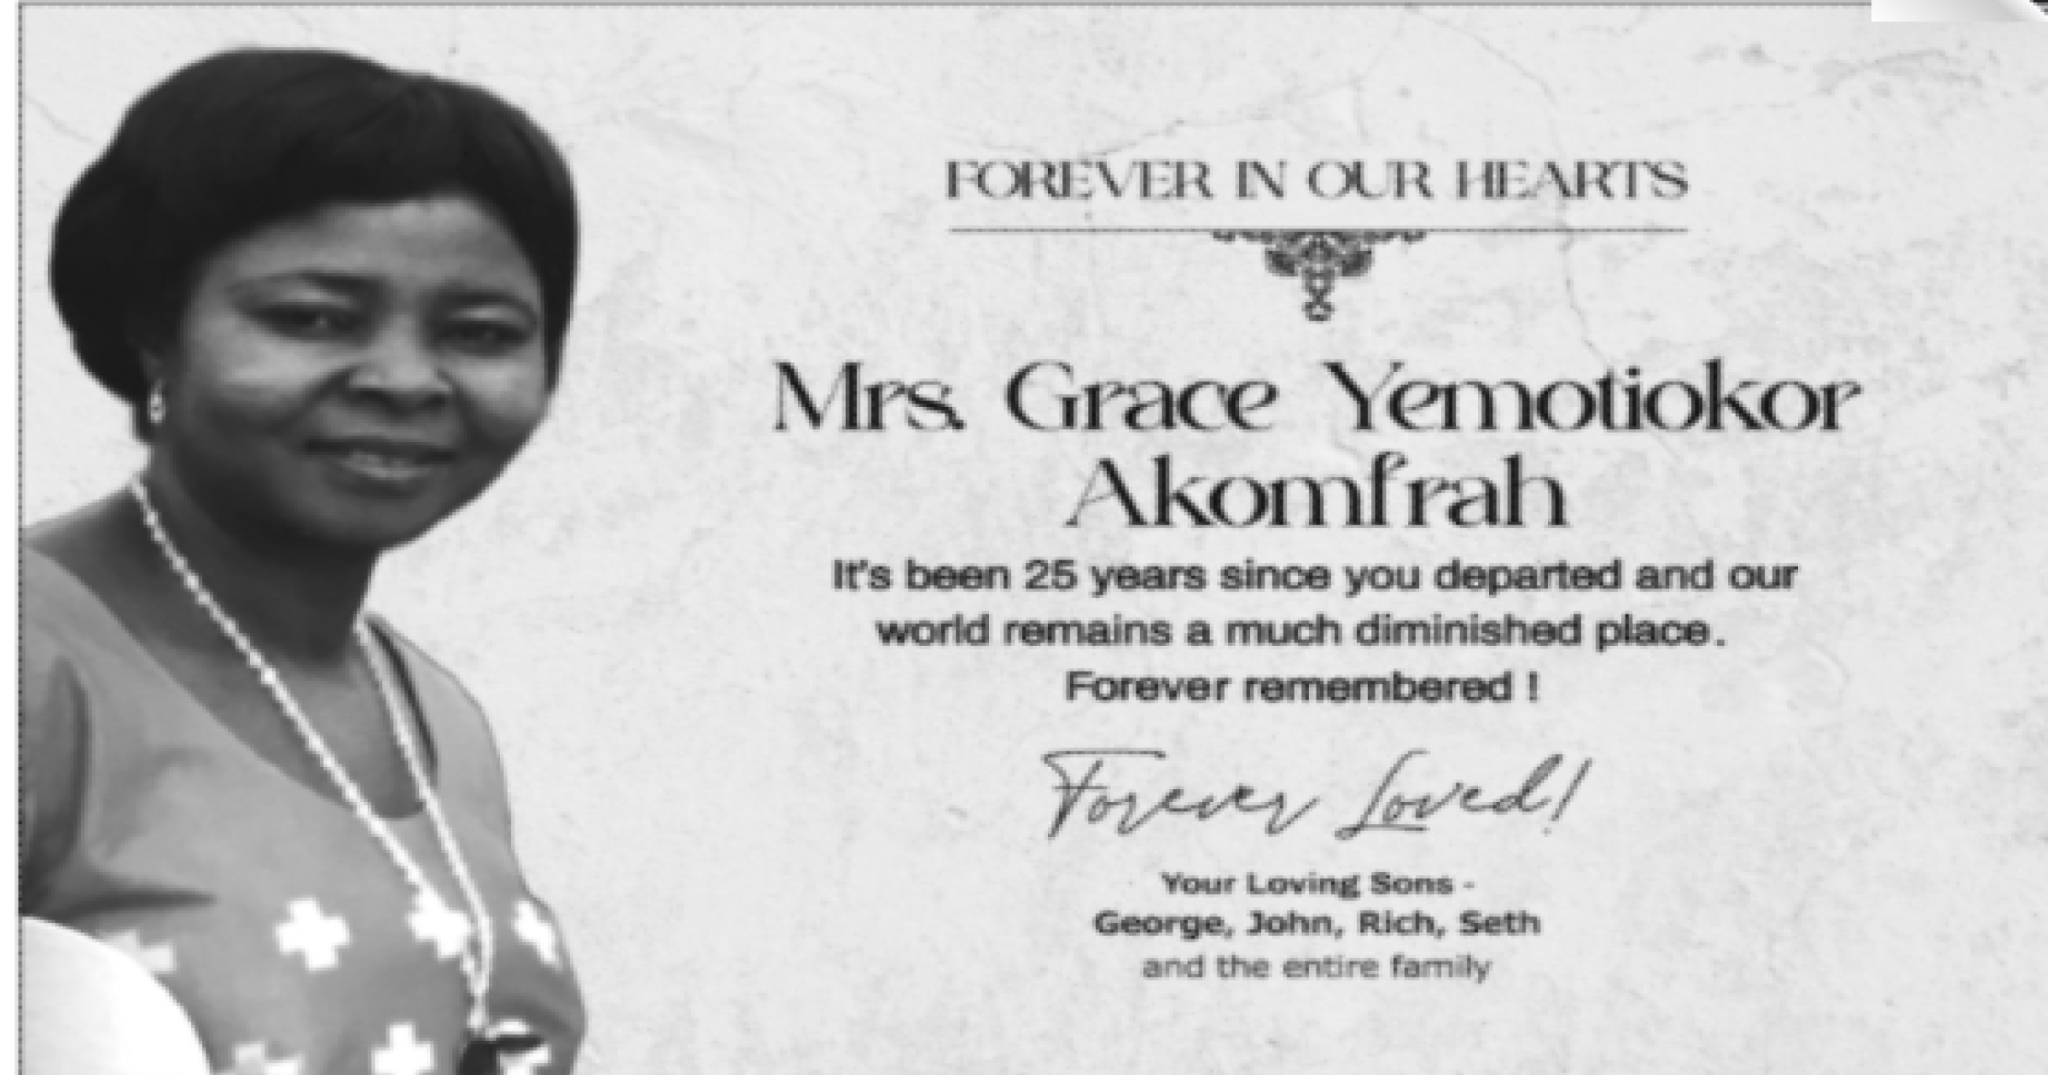 Mrs. Grace Yemotiokor Akomfrah